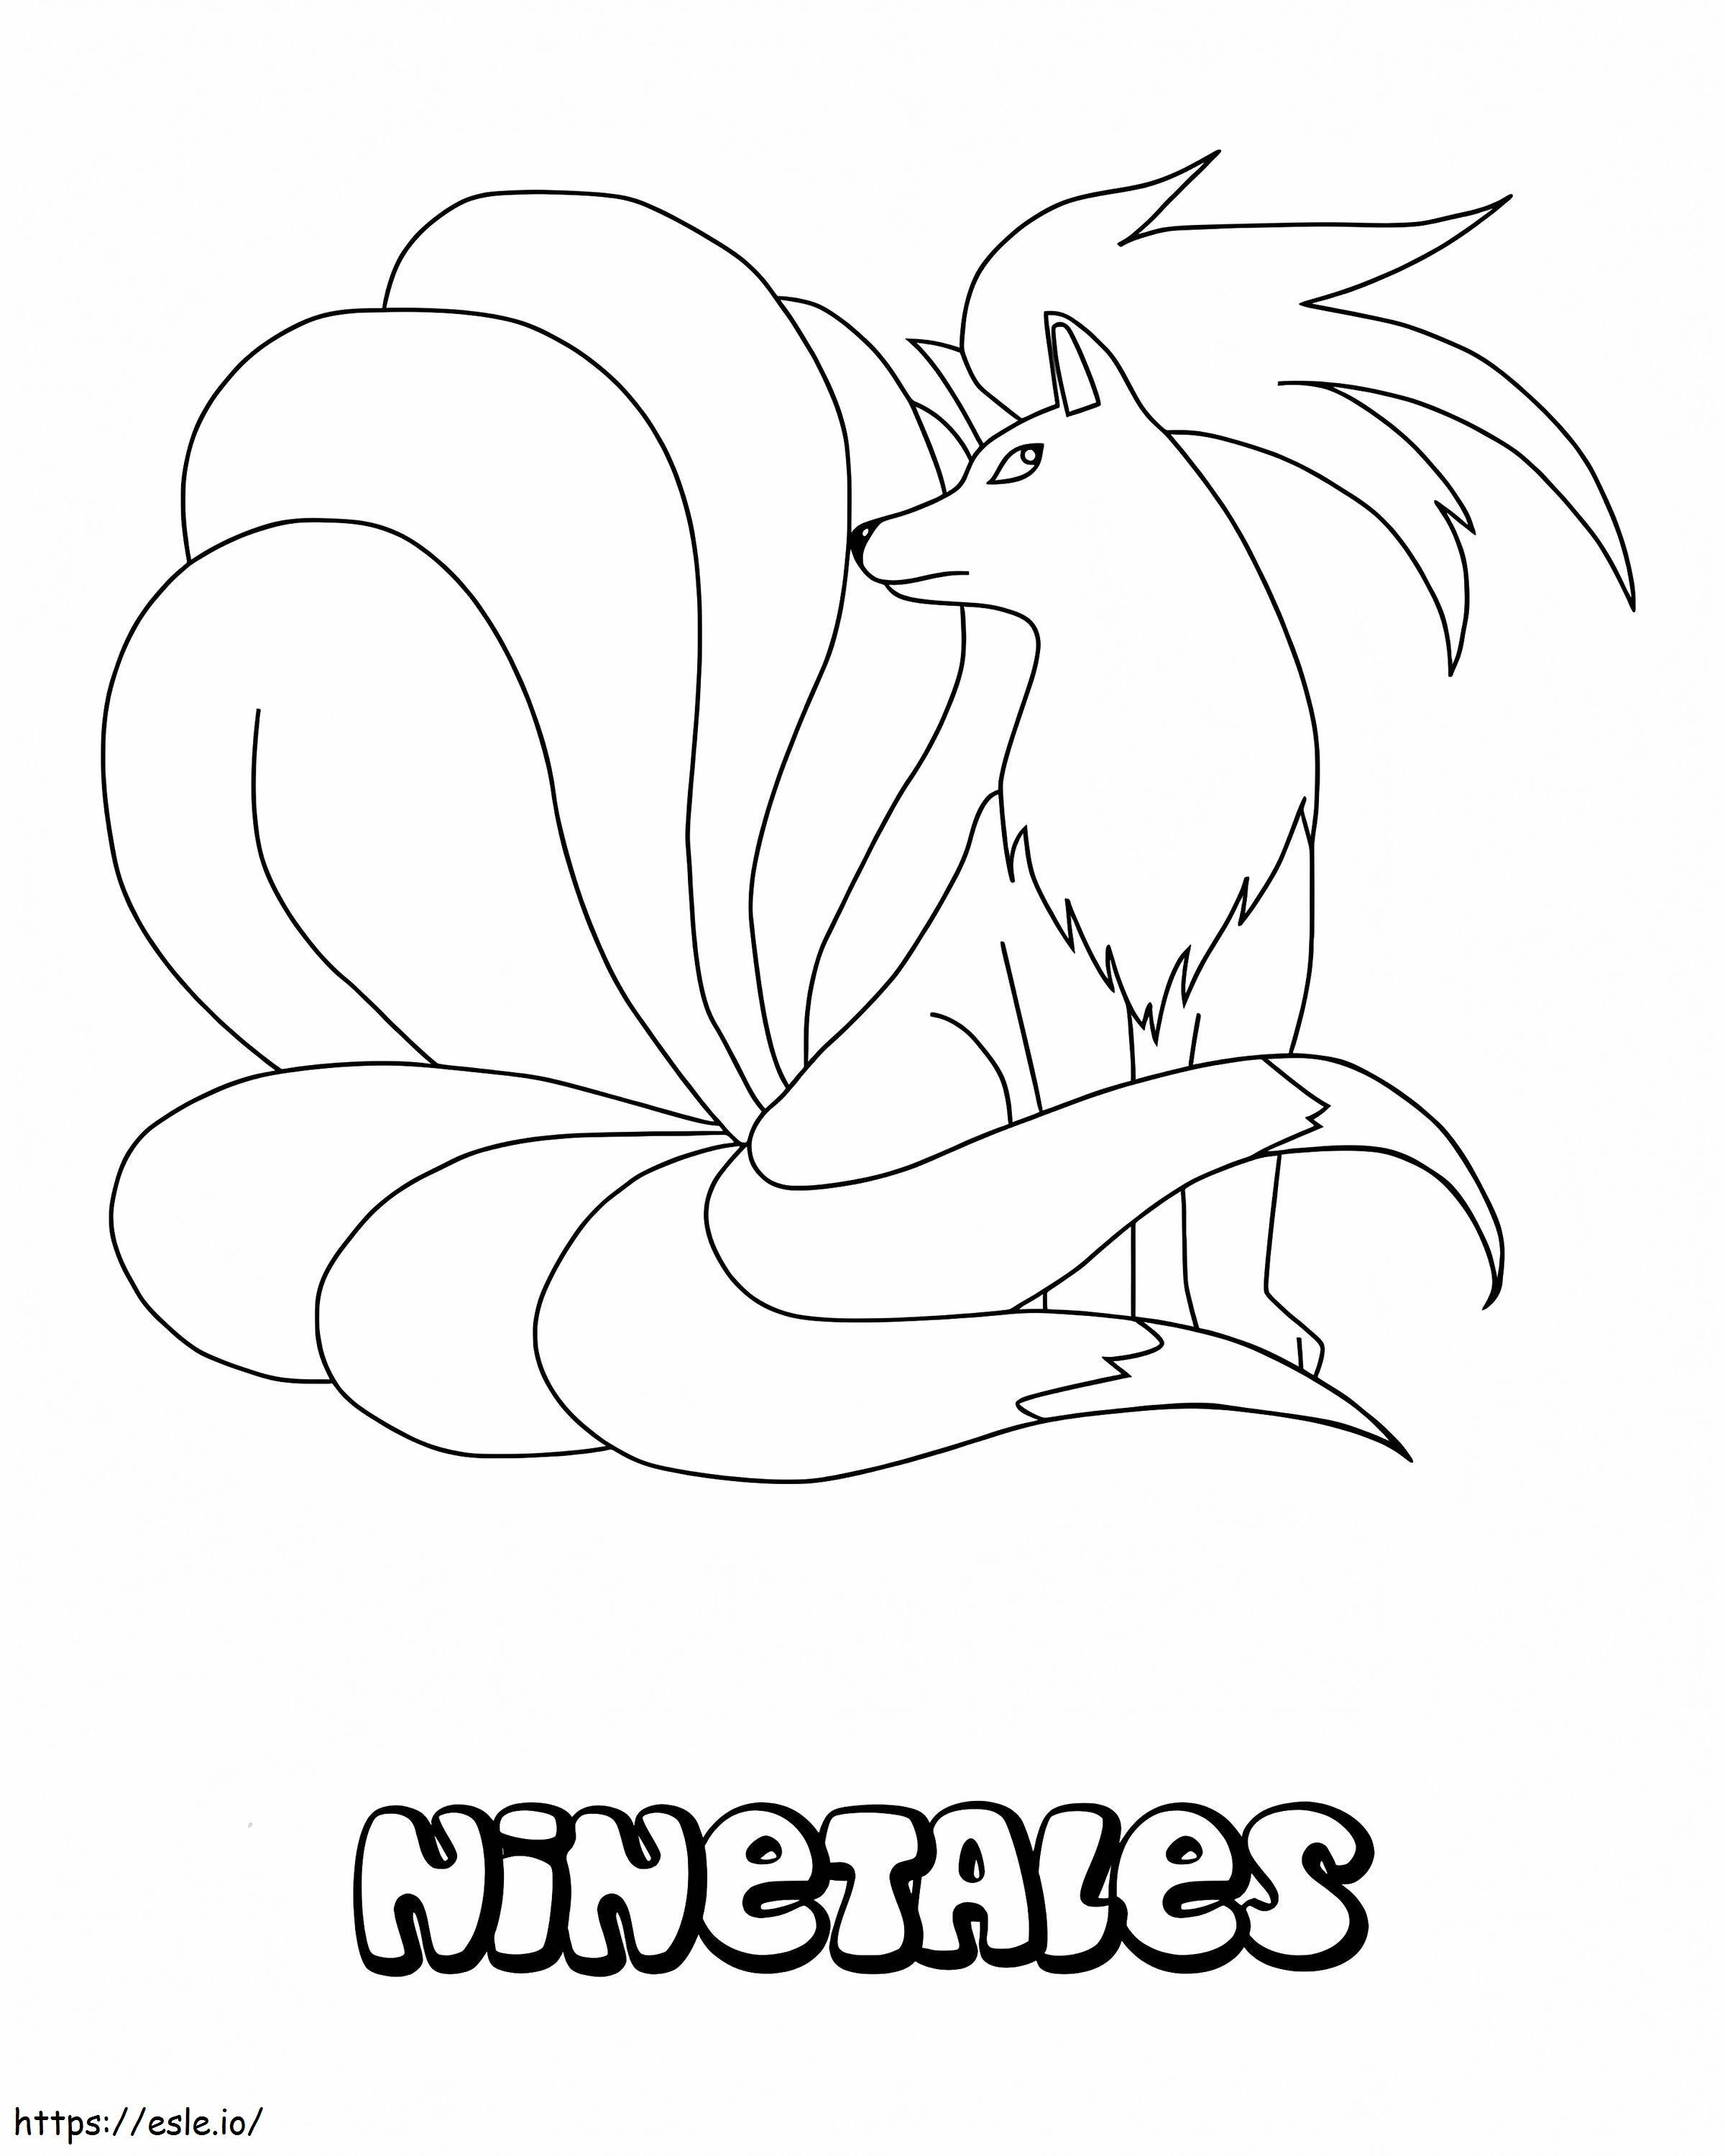 Ninetales Pokemon coloring page